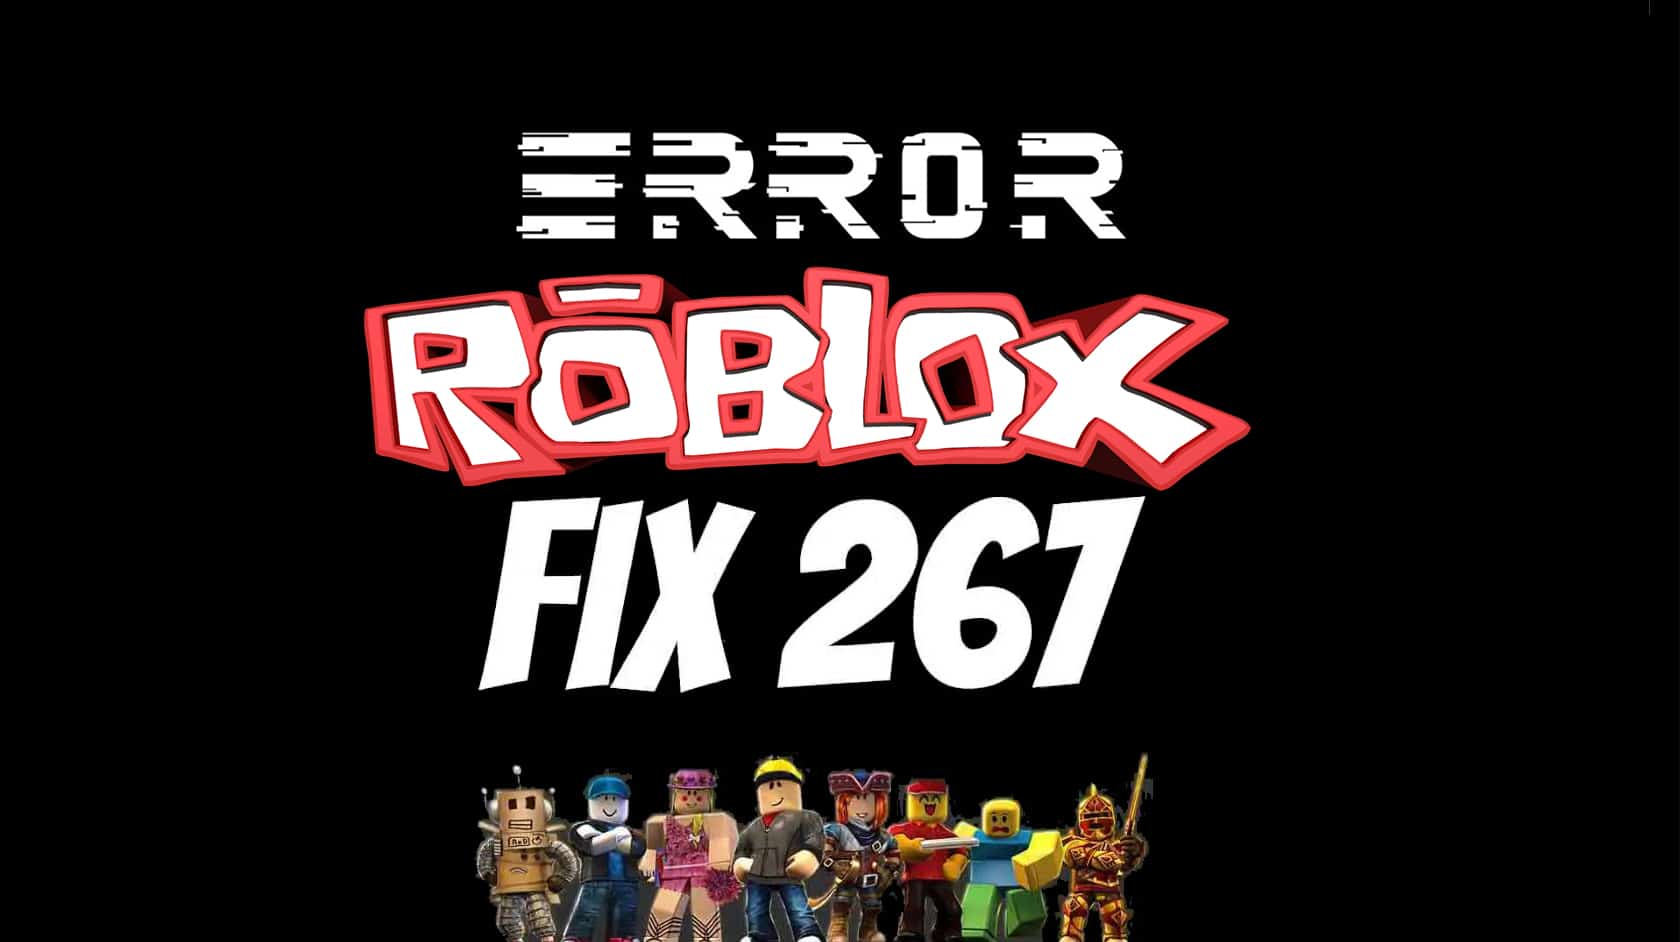 Roblox error code 267